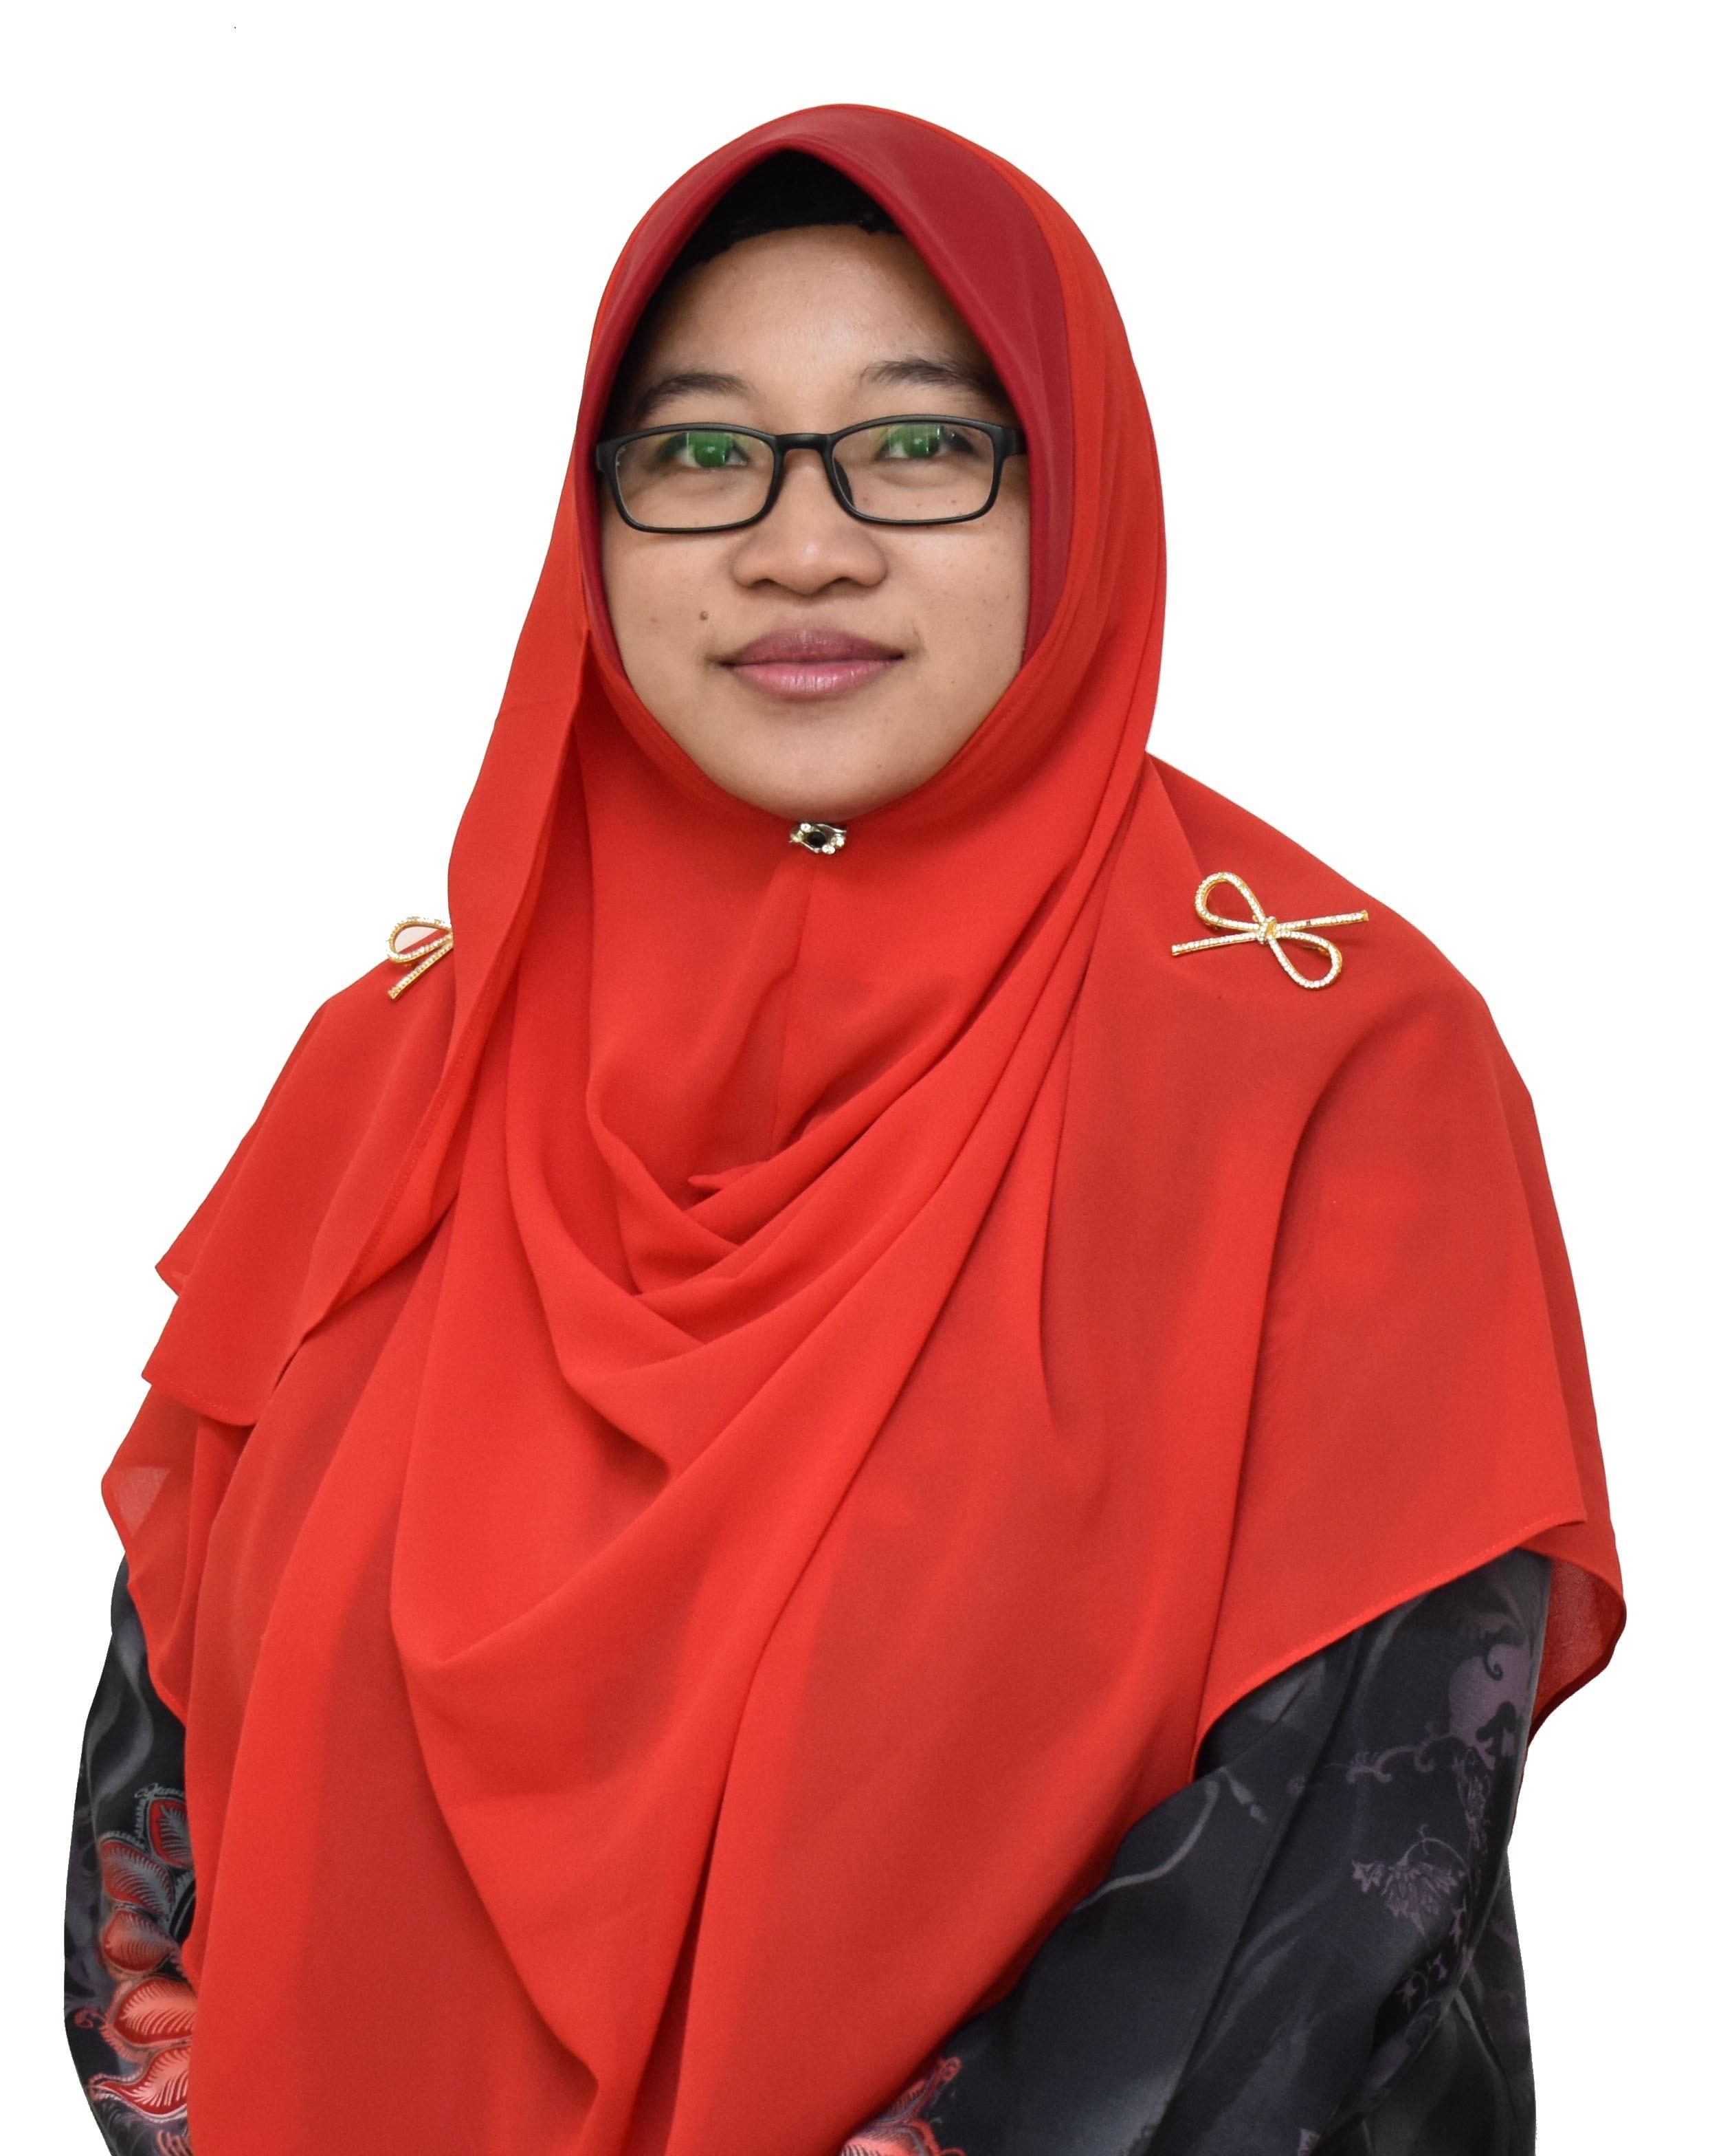 Nadiah Syauqy Binti Mansor